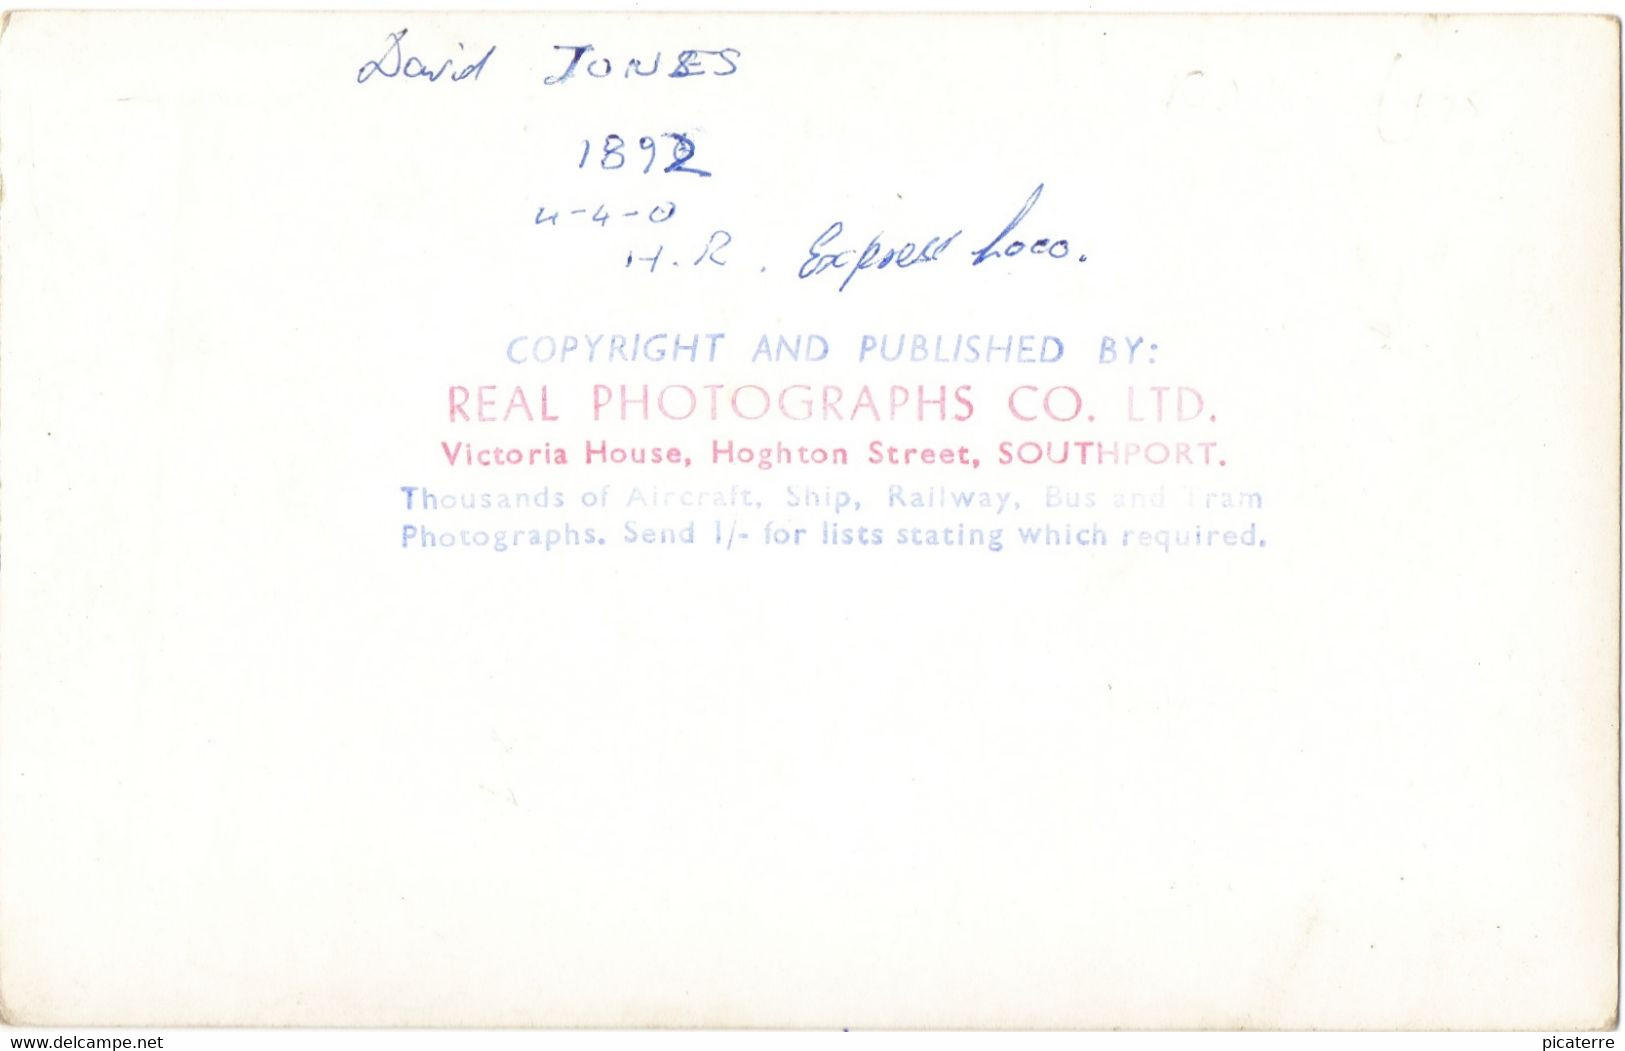 Postcard Size Photograph-"Strathtay" HR Strath Class 4-4-0 No.94 (built 1892, Retired 1924) - Trains